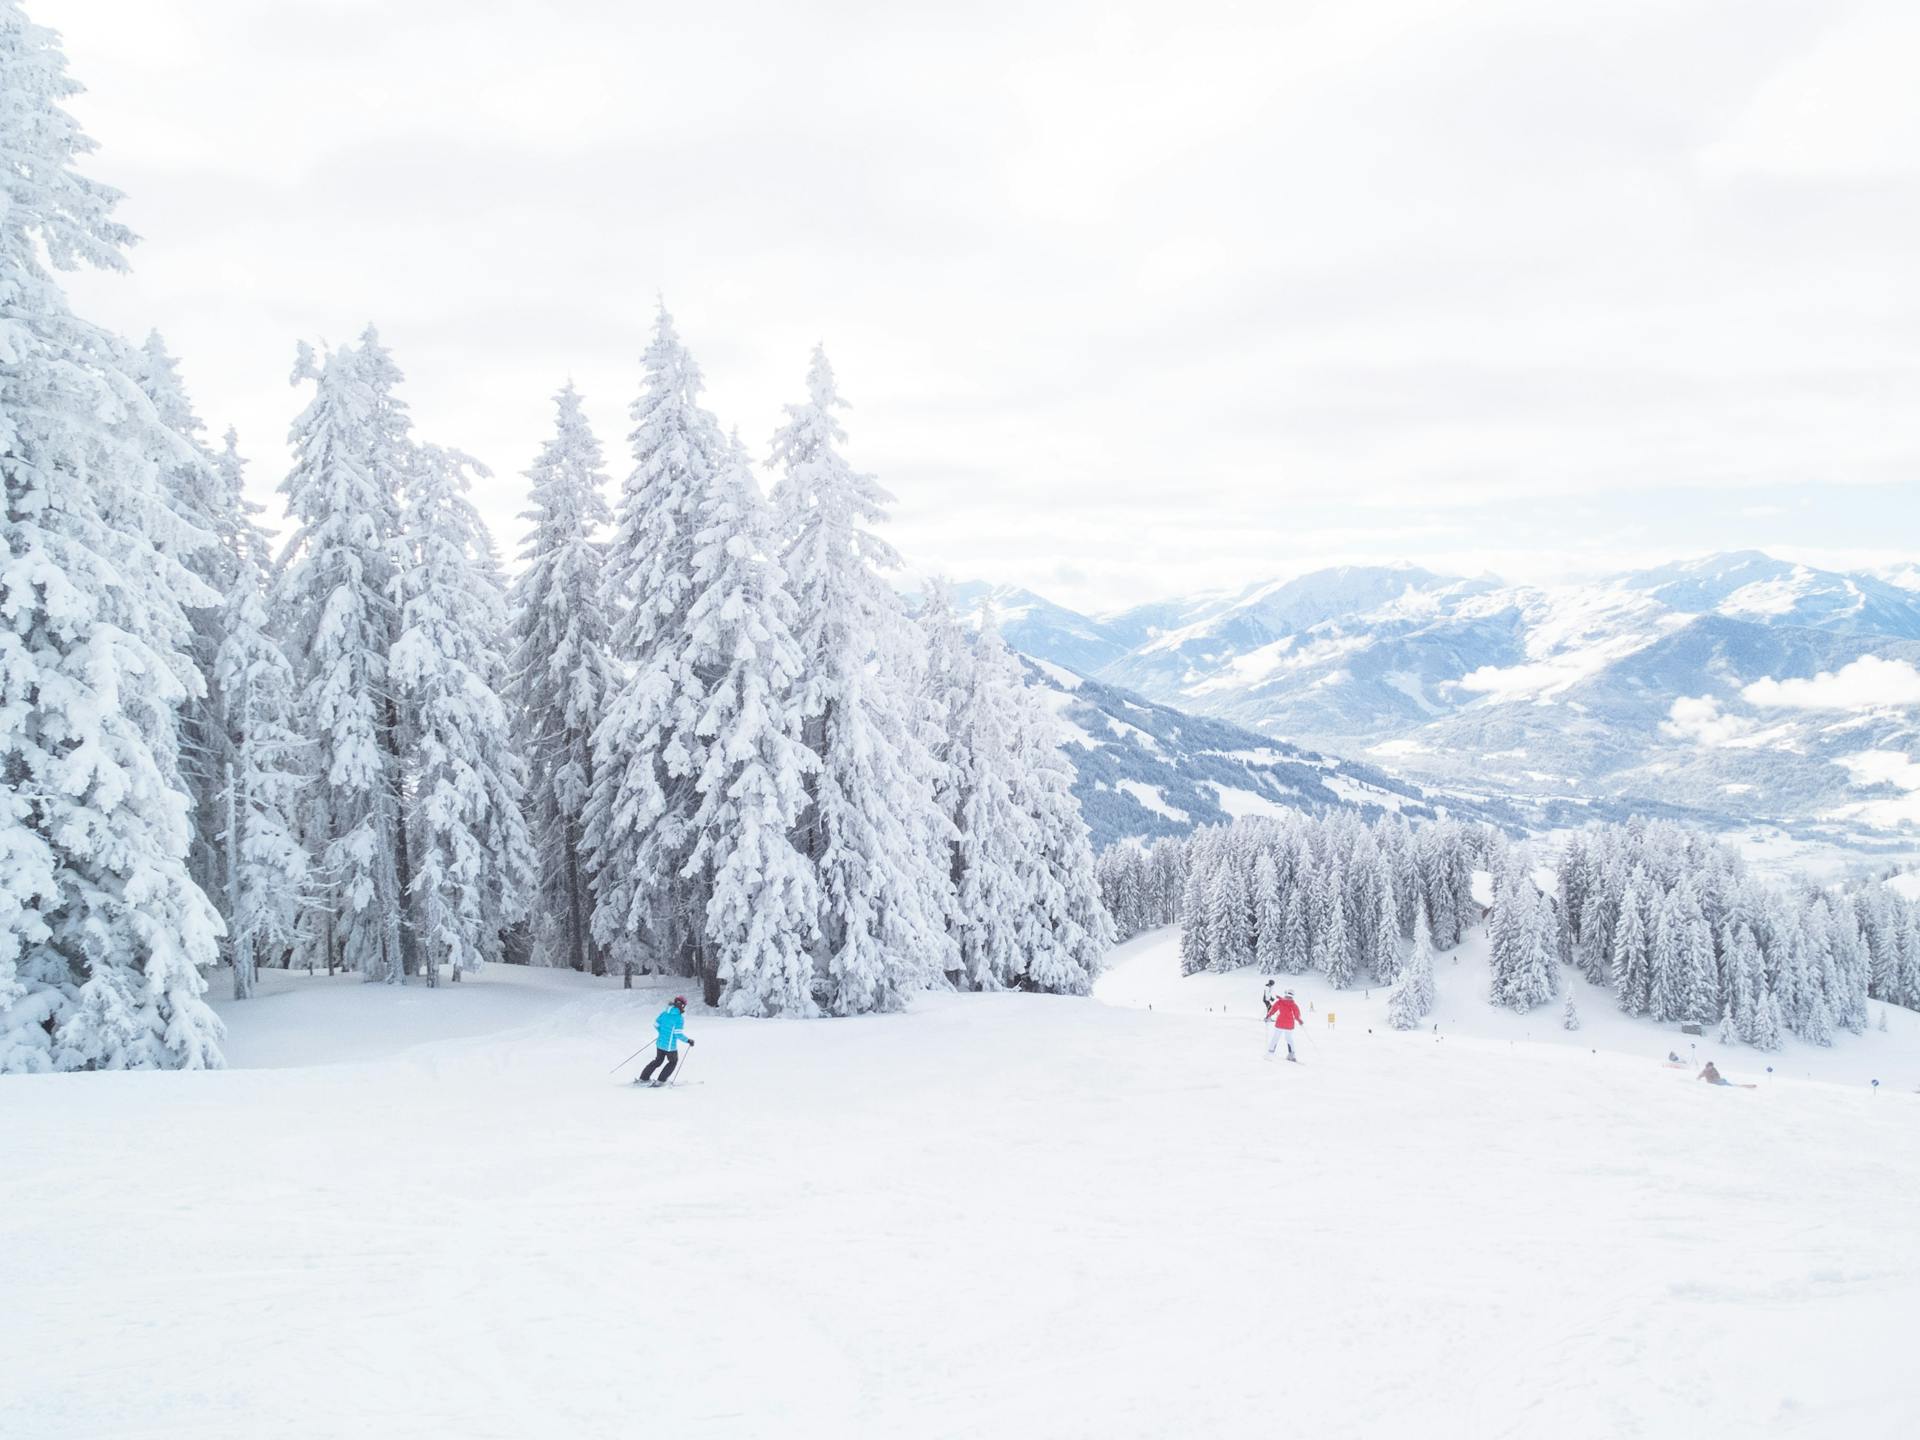 Skiiers skiing down snowy mountain in Austria